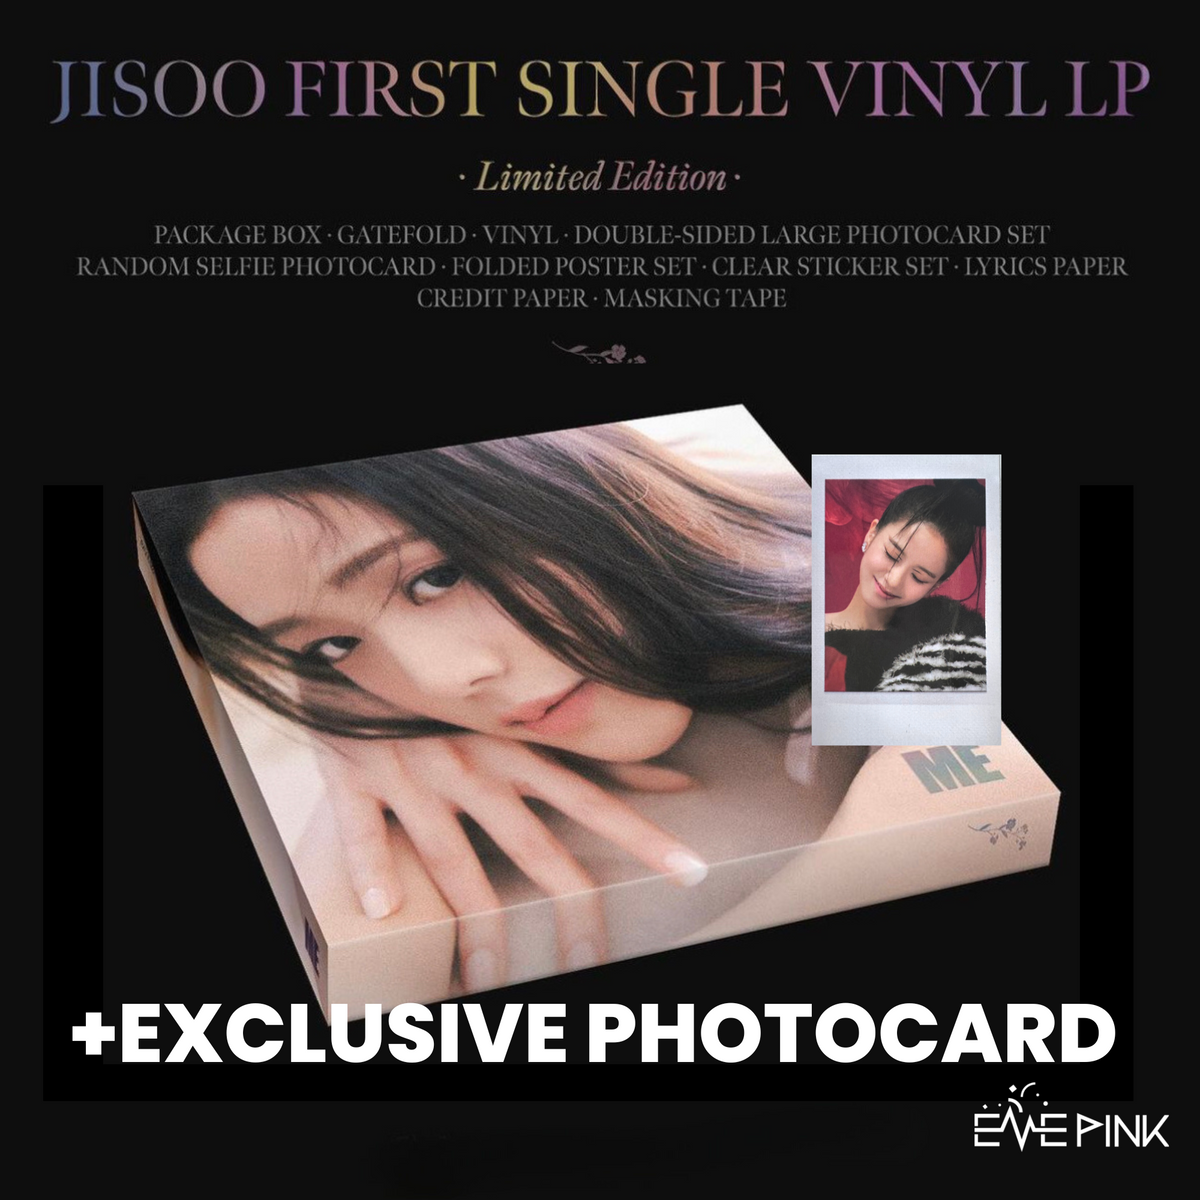 Jisoo first single Vinyl LP